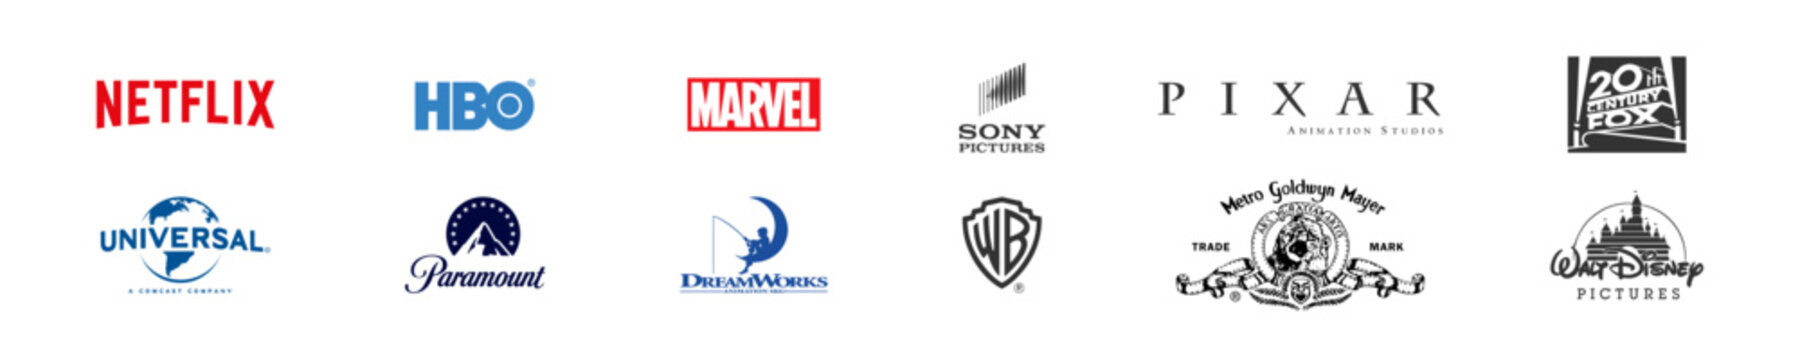 Top film and cinema studio company logo set. Netflix, hbo, universal, paramount, dreamworks, marvel, worner bros, sony, pixar, 20th century fox, disnep, metro goldwyn mayer, columbia. Editorial vector